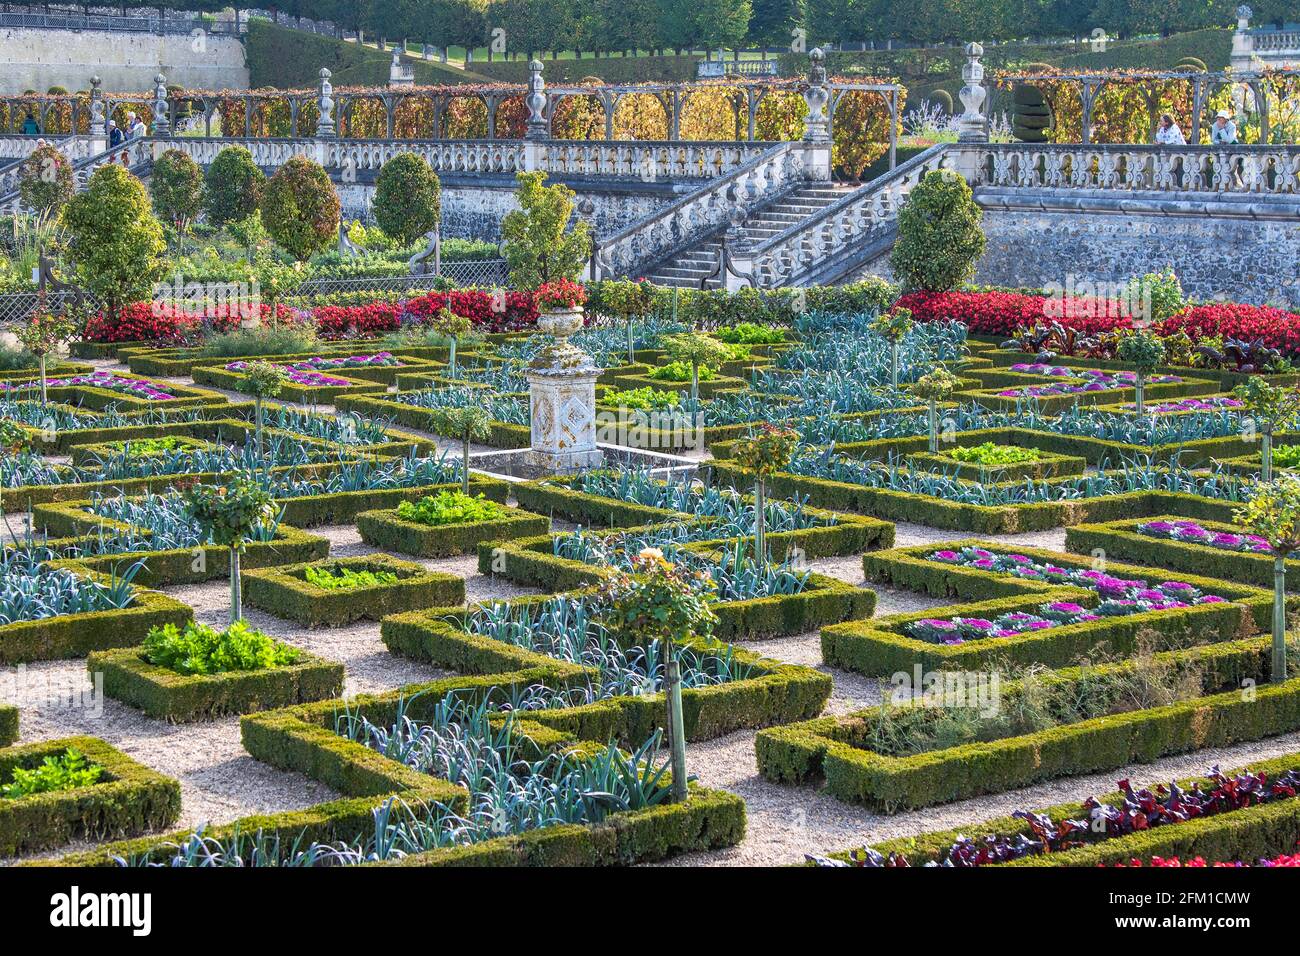 Castle and gardens of Villandry, Loire valley Stock Photo